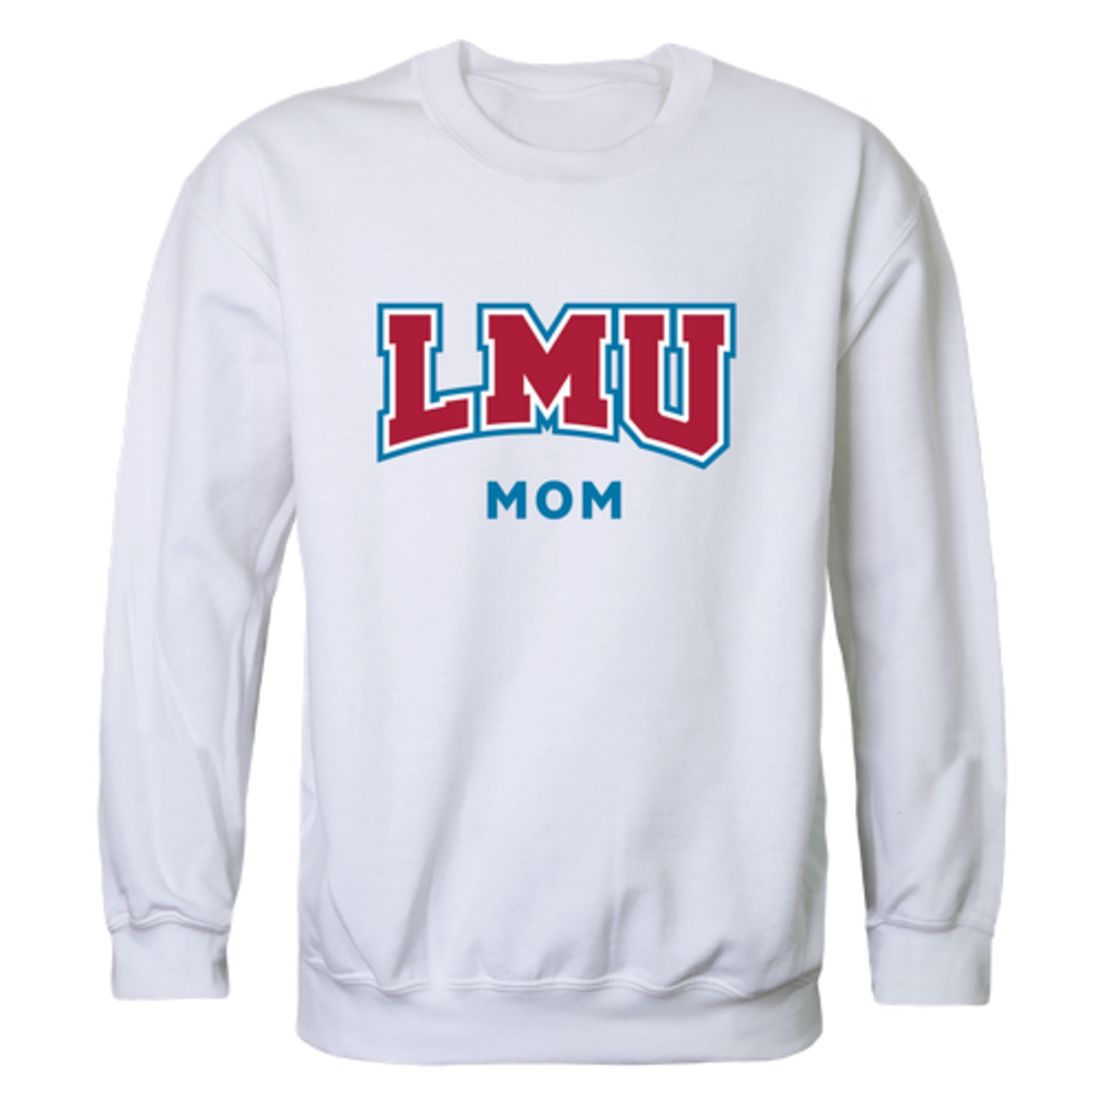 LMU Loyola Marymount University Lions Mom Fleece Crewneck Pullover Sweatshirt Heather Charcoal Small-Campus-Wardrobe